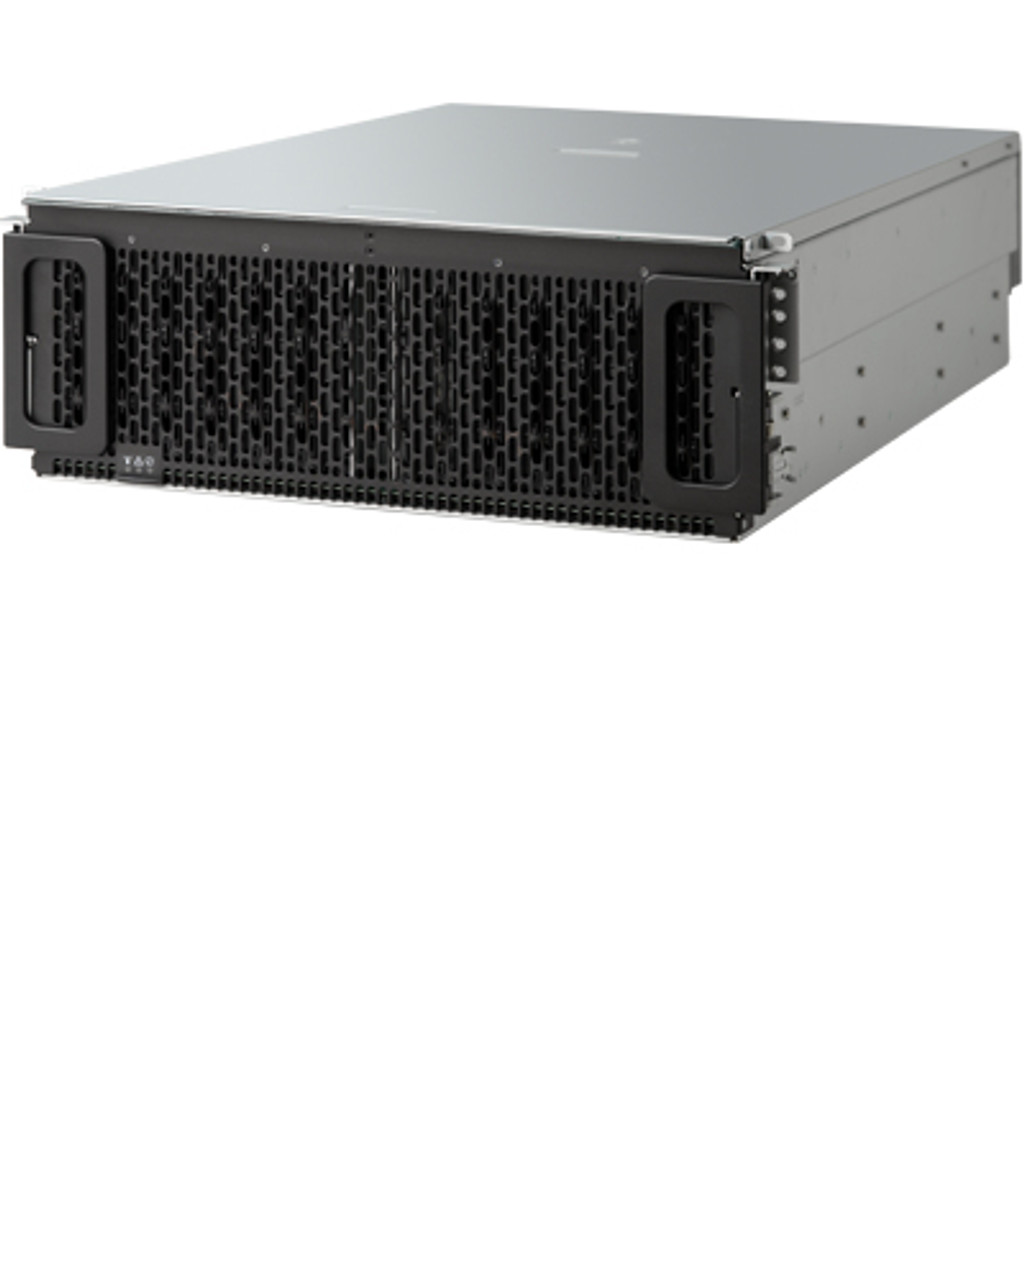 1ES1235 | HGST | Ultrastar Data60 disk array 480 TB Rack (4U) Black